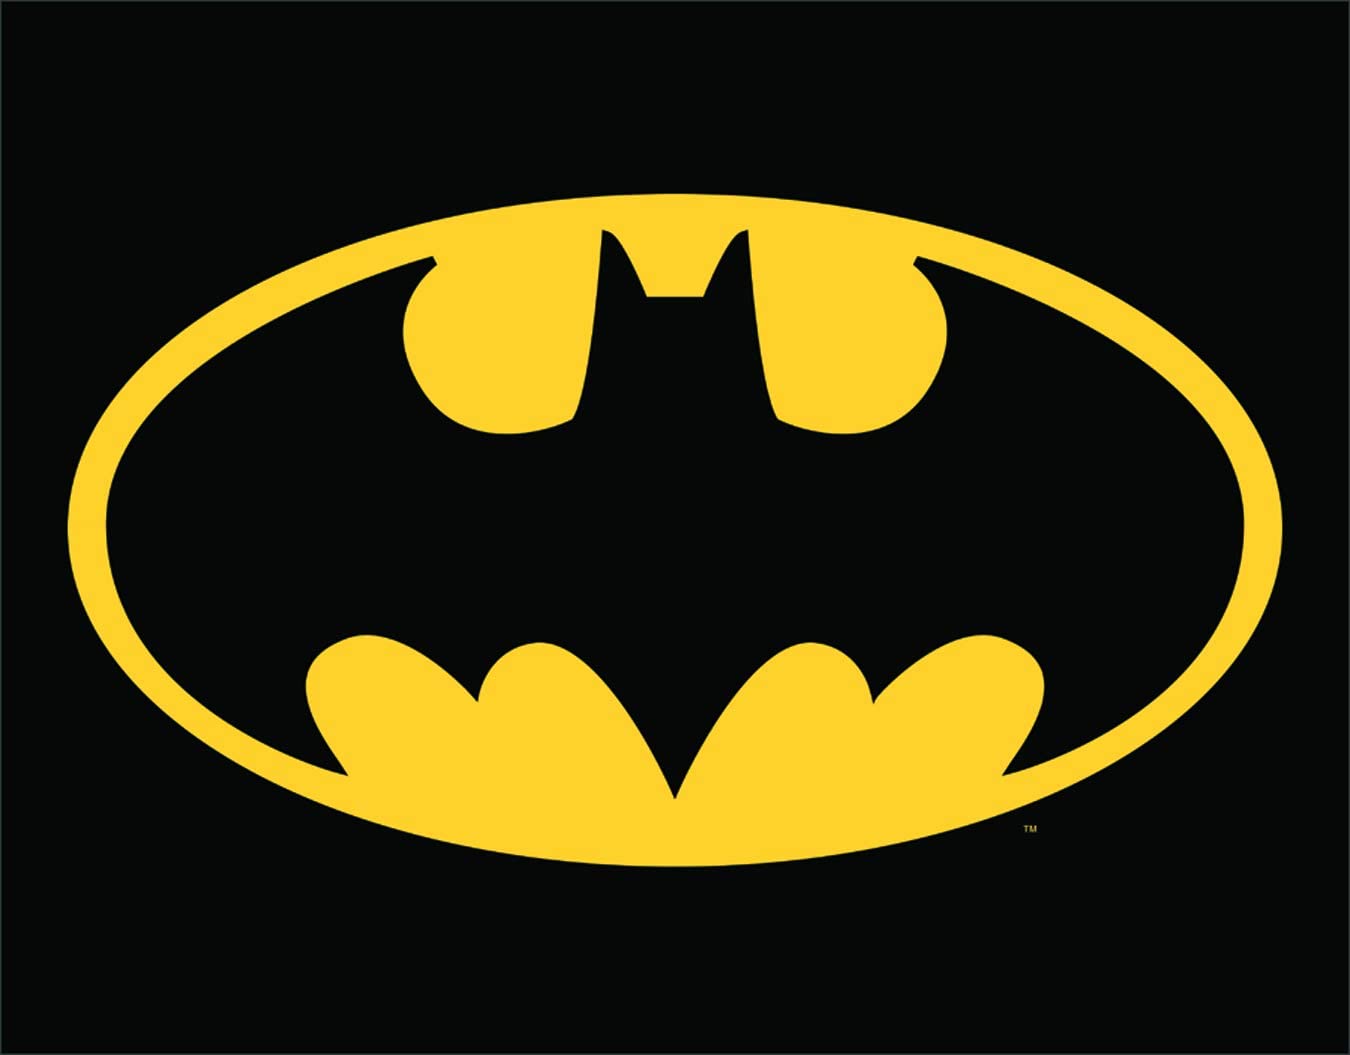 batman font free download photoshop